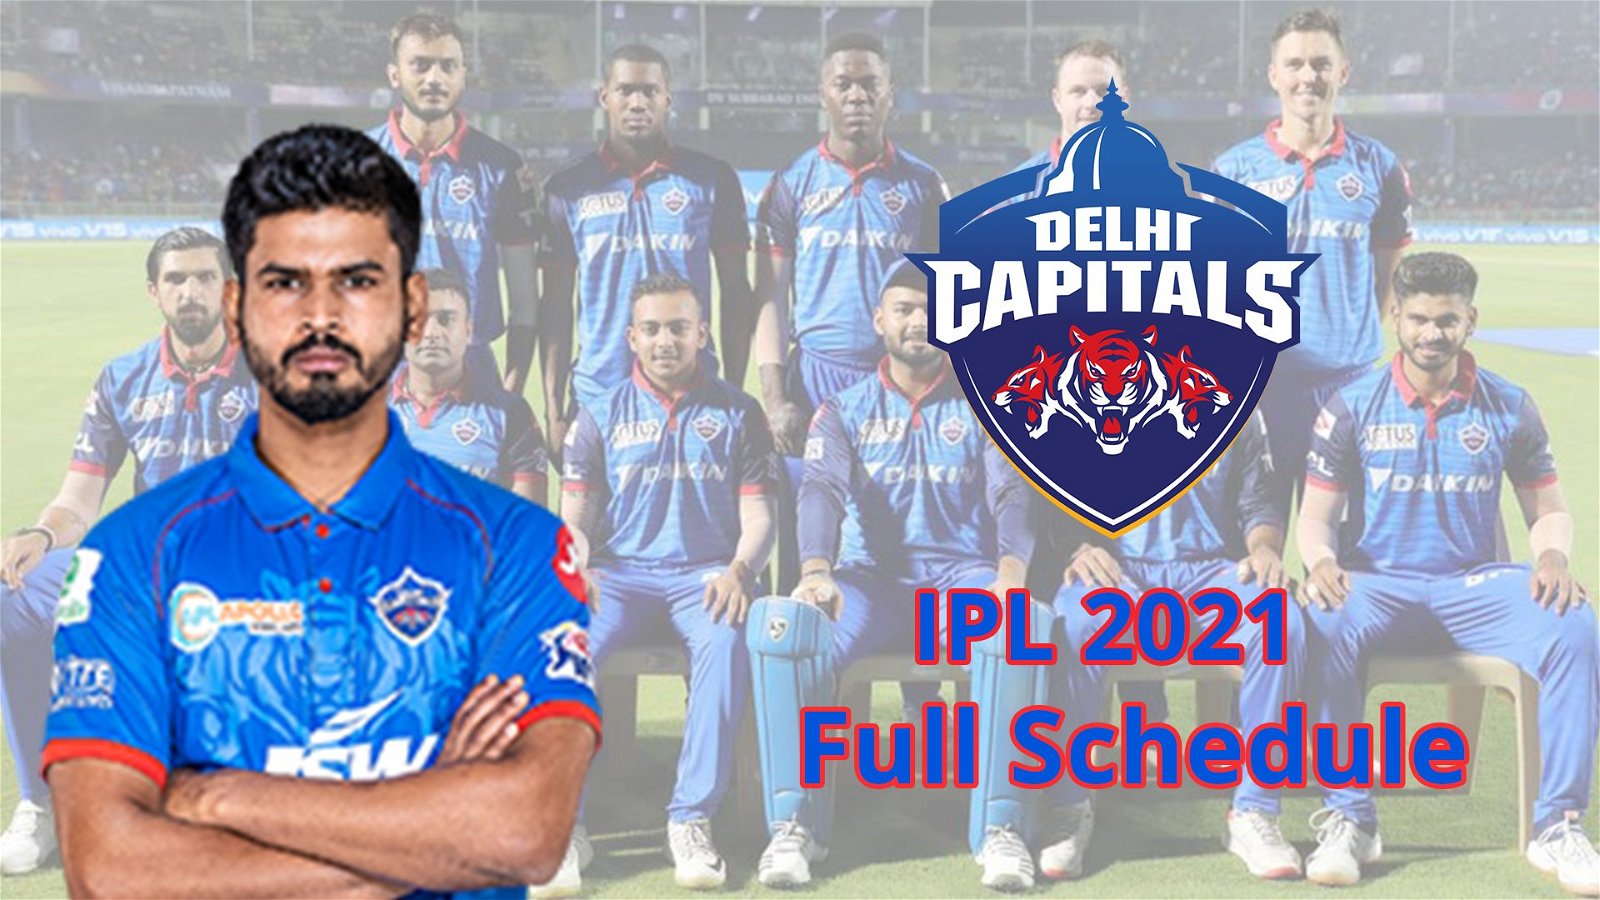 IPL 2021: Complete Schedule Of Delhi Capitals (DC) For The Tournament